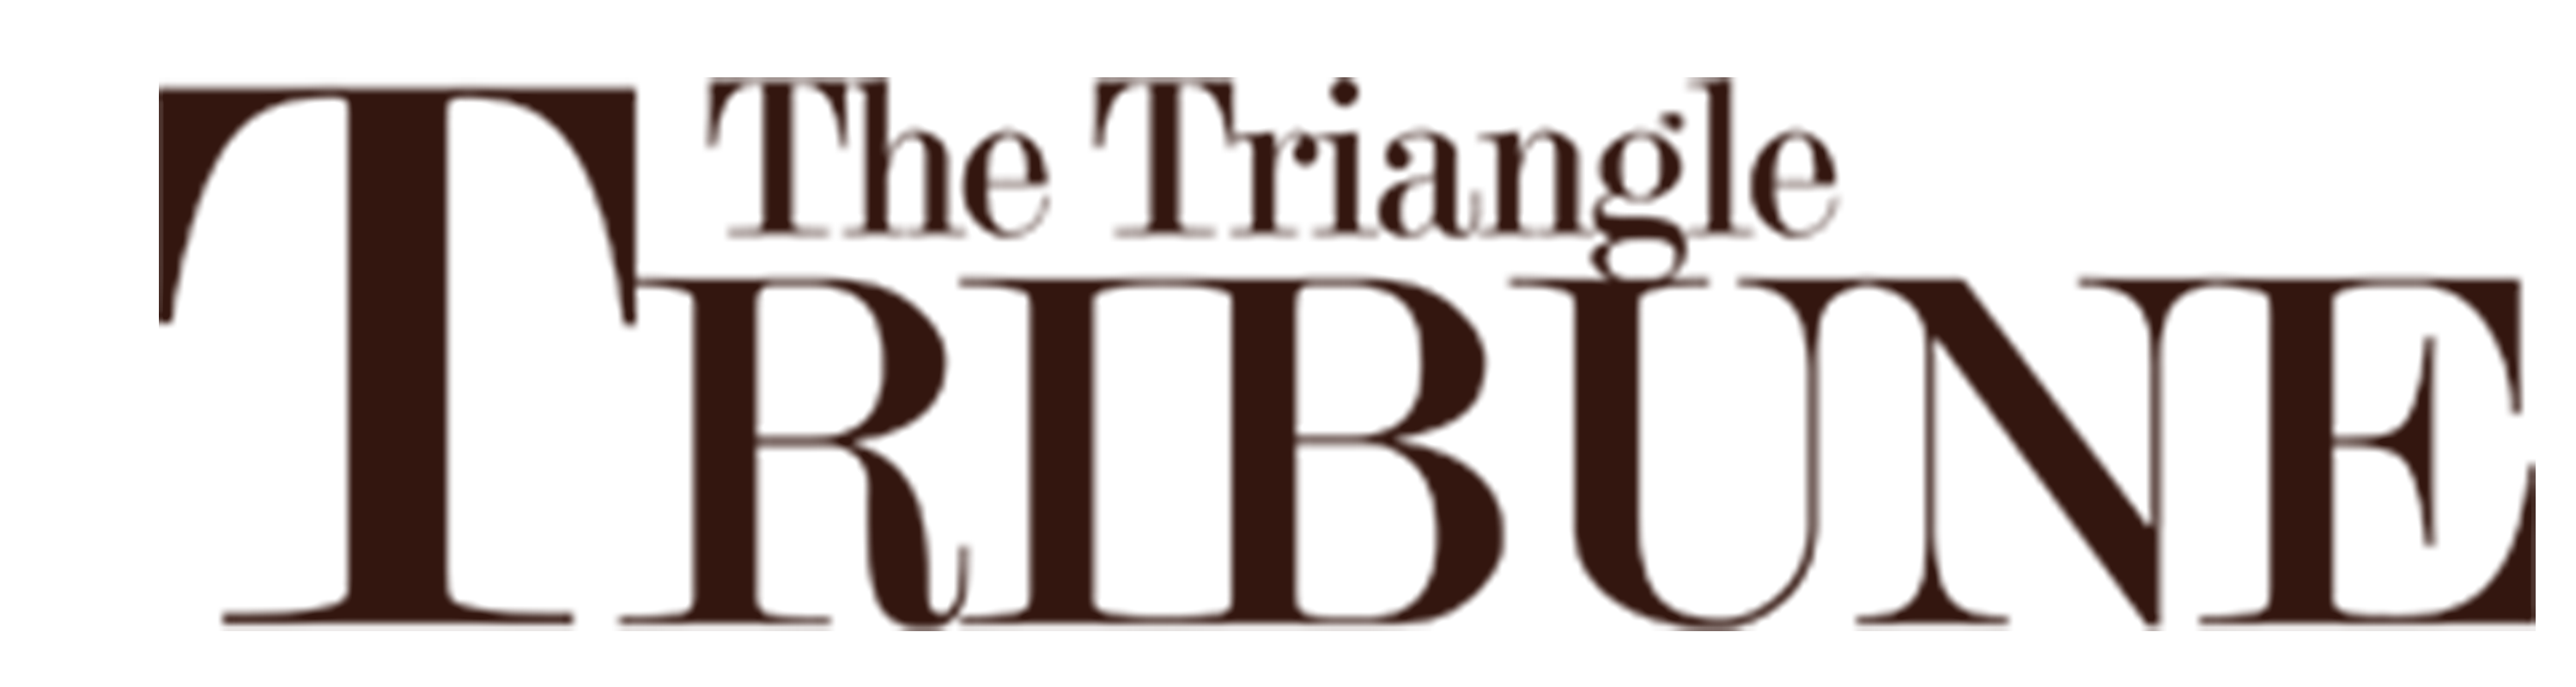 The Triangle Tribune logo